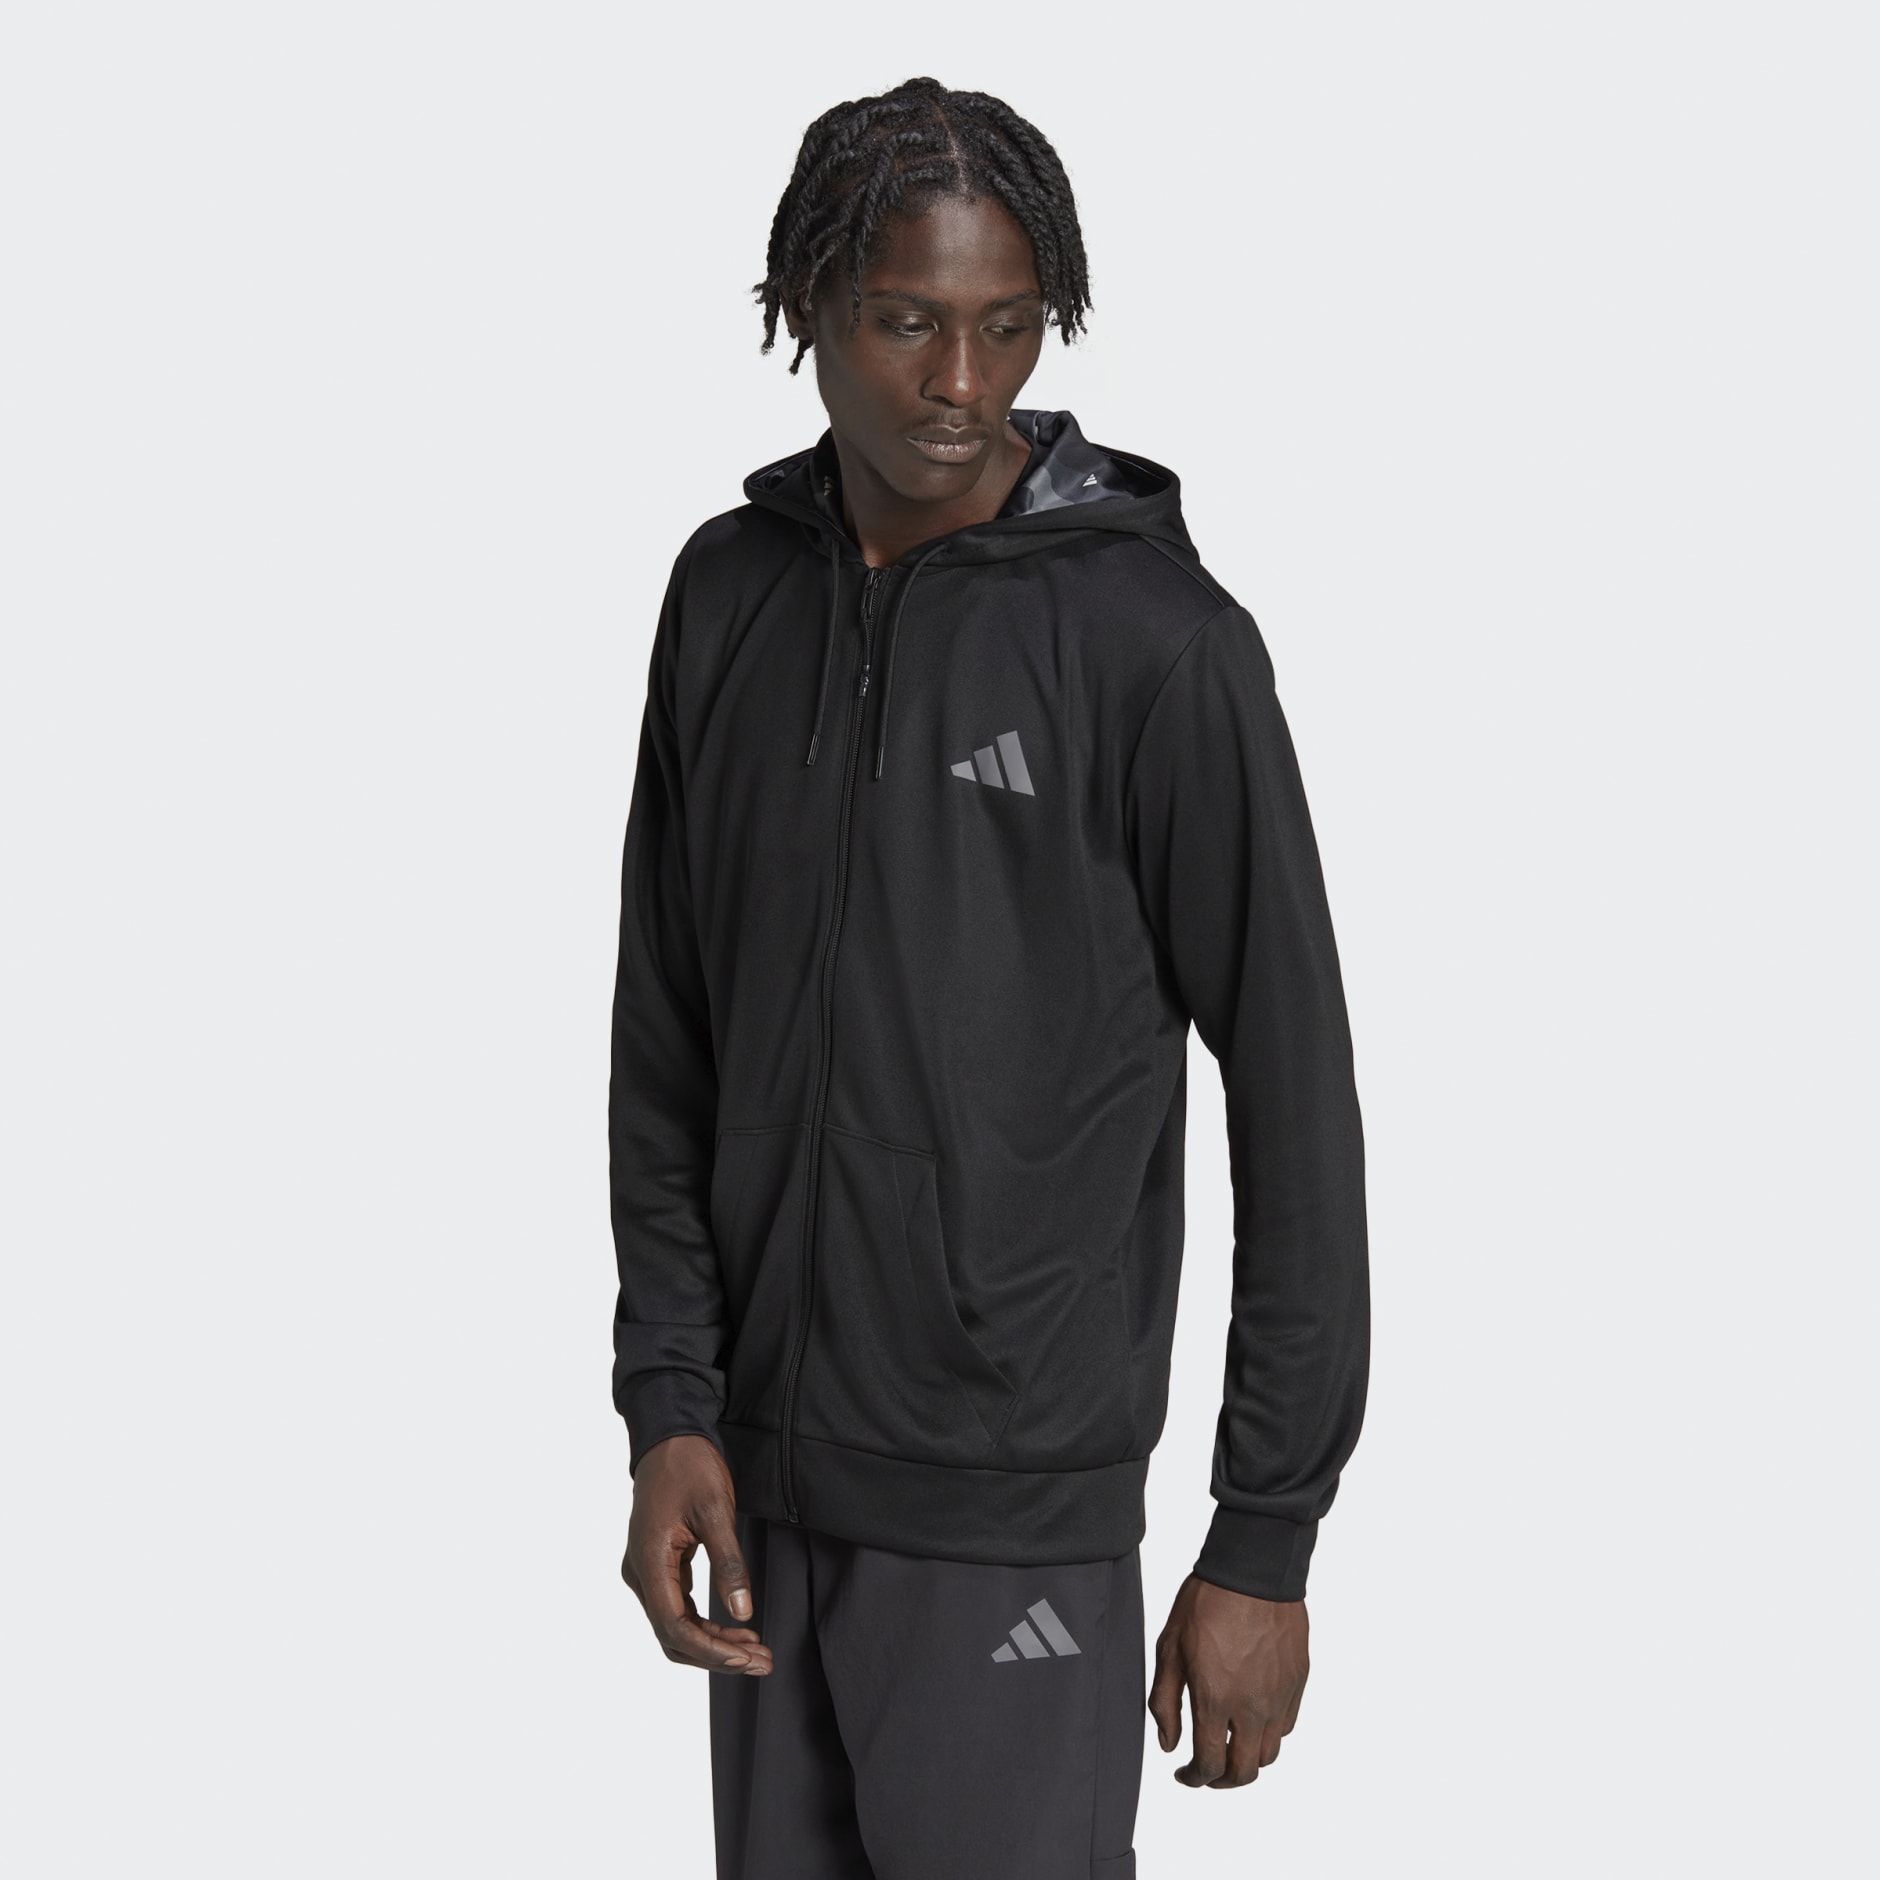 Tebo Men's Luxury TD Monogram Embossed Sports Jacket & Sweatpants